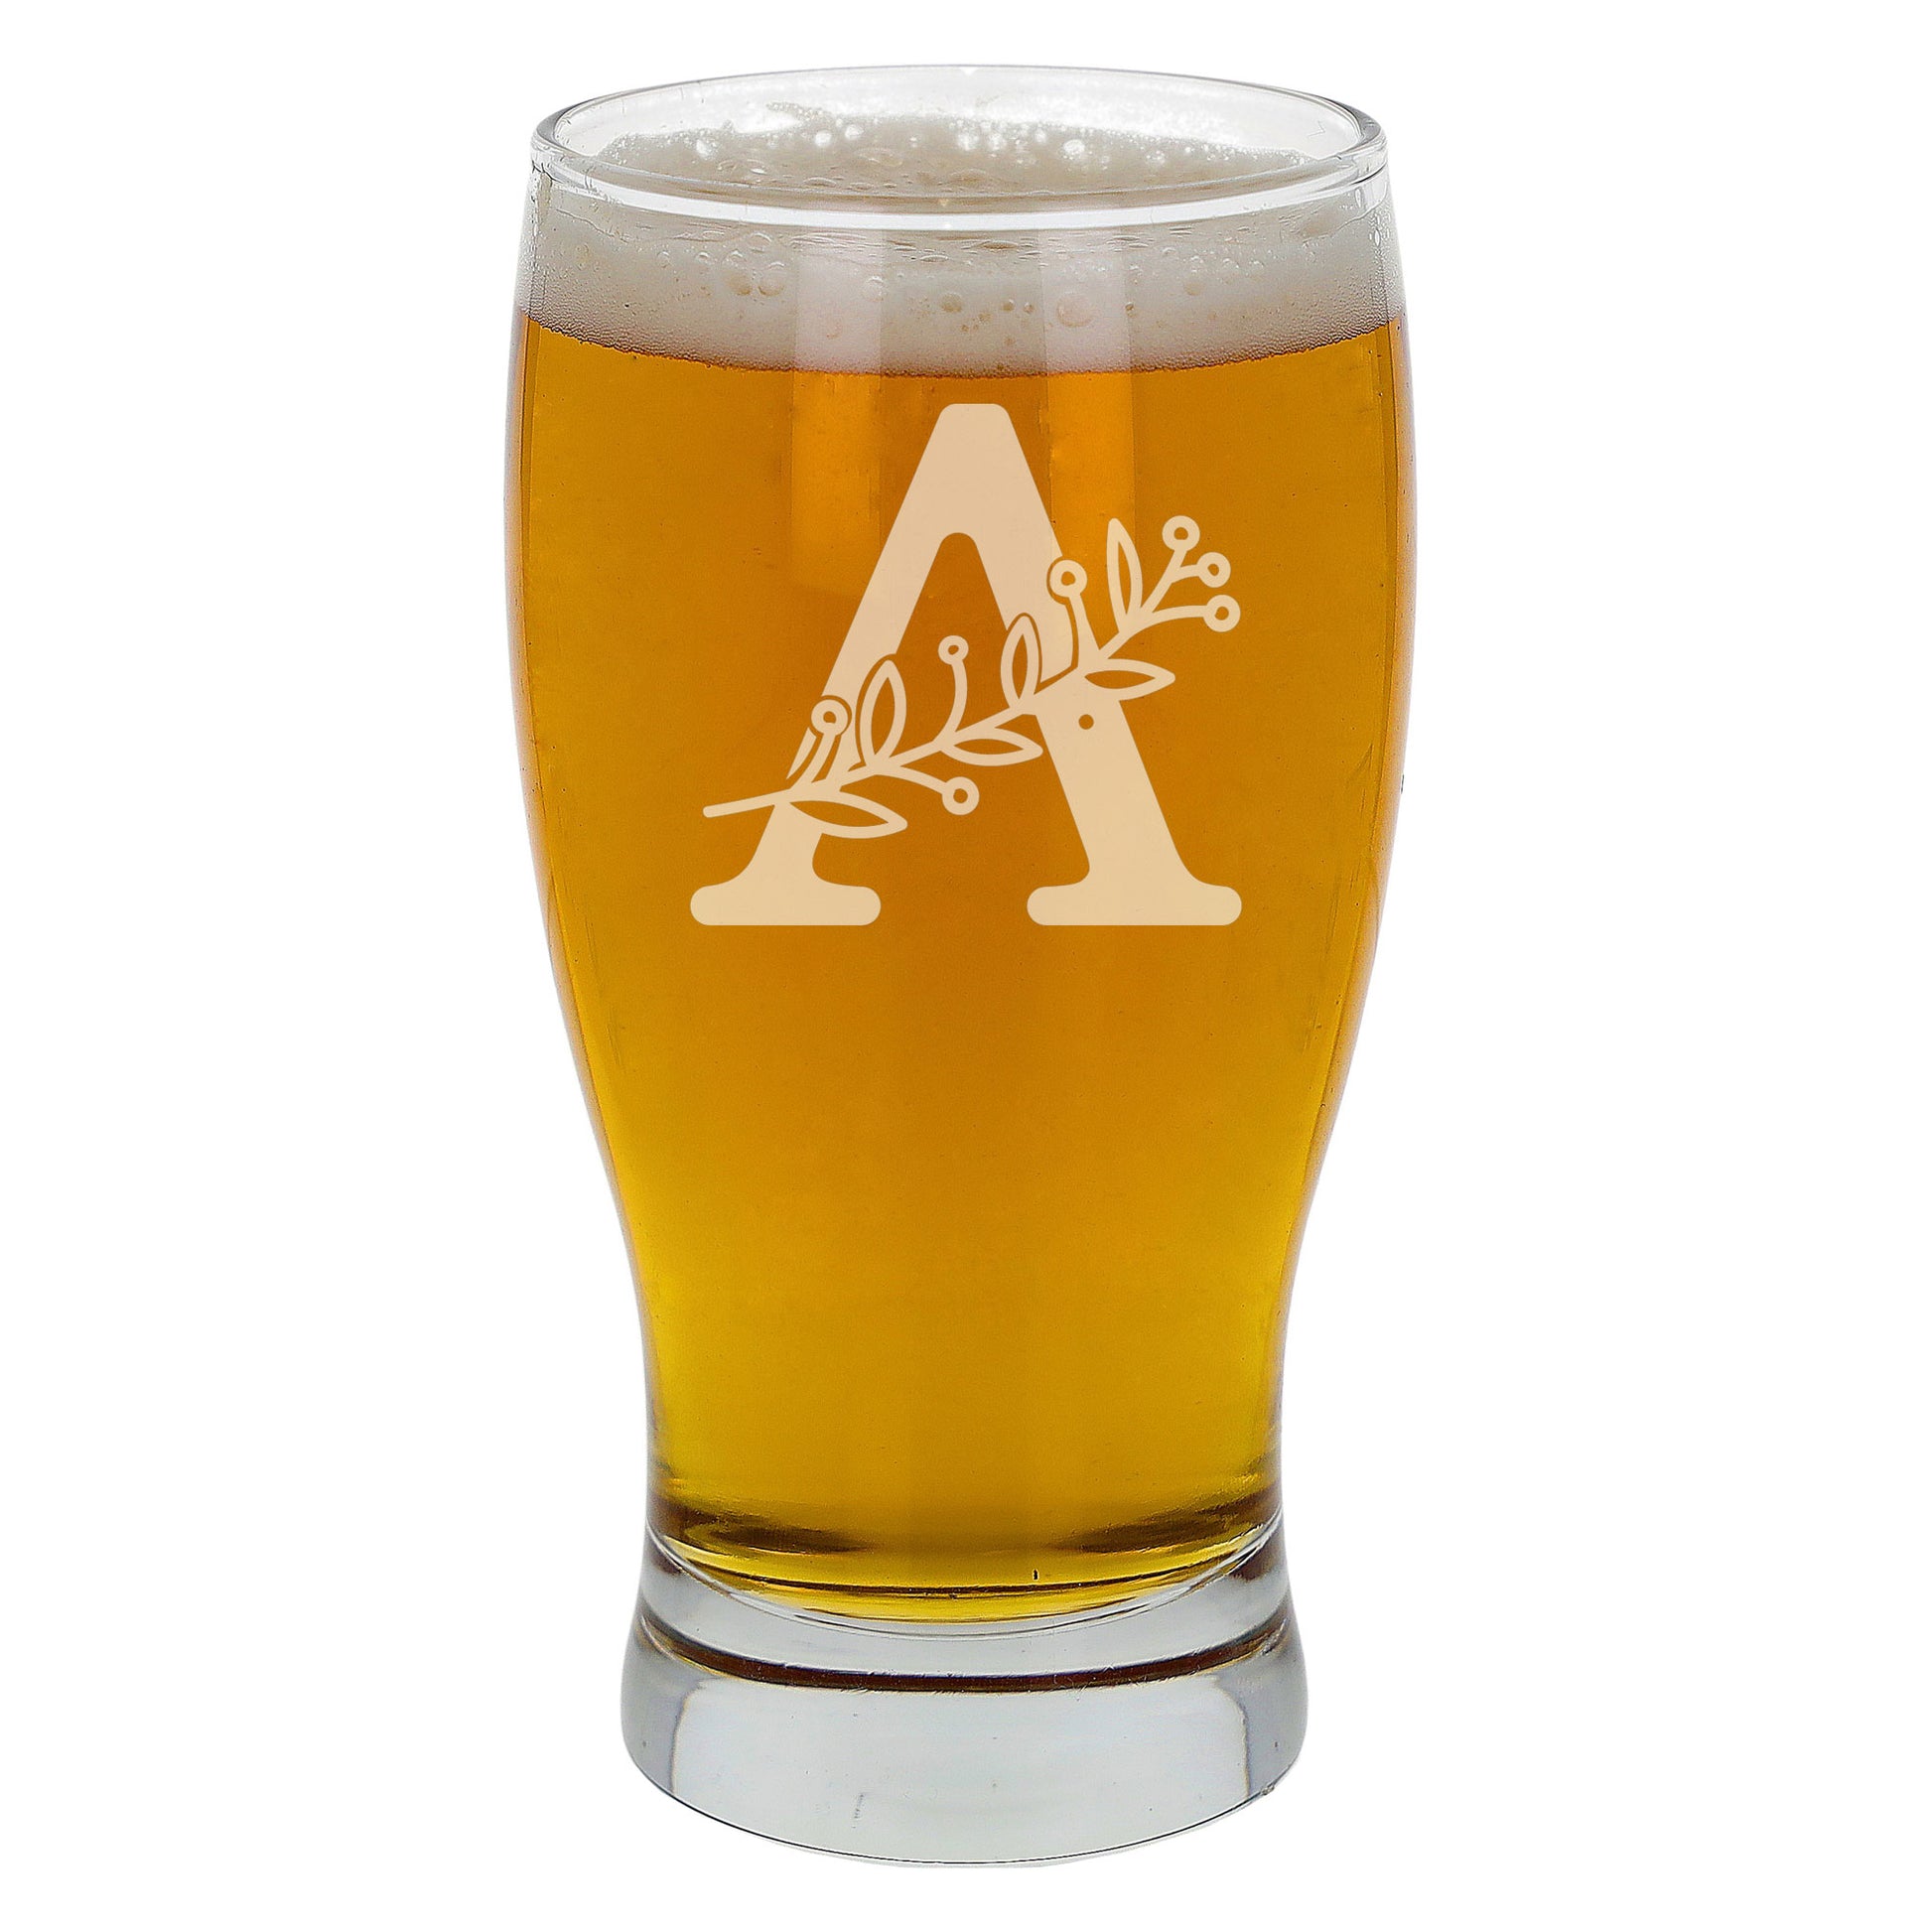 Monogram Engraved Beer Pint Glass and/or Coaster Set  - Always Looking Good -   